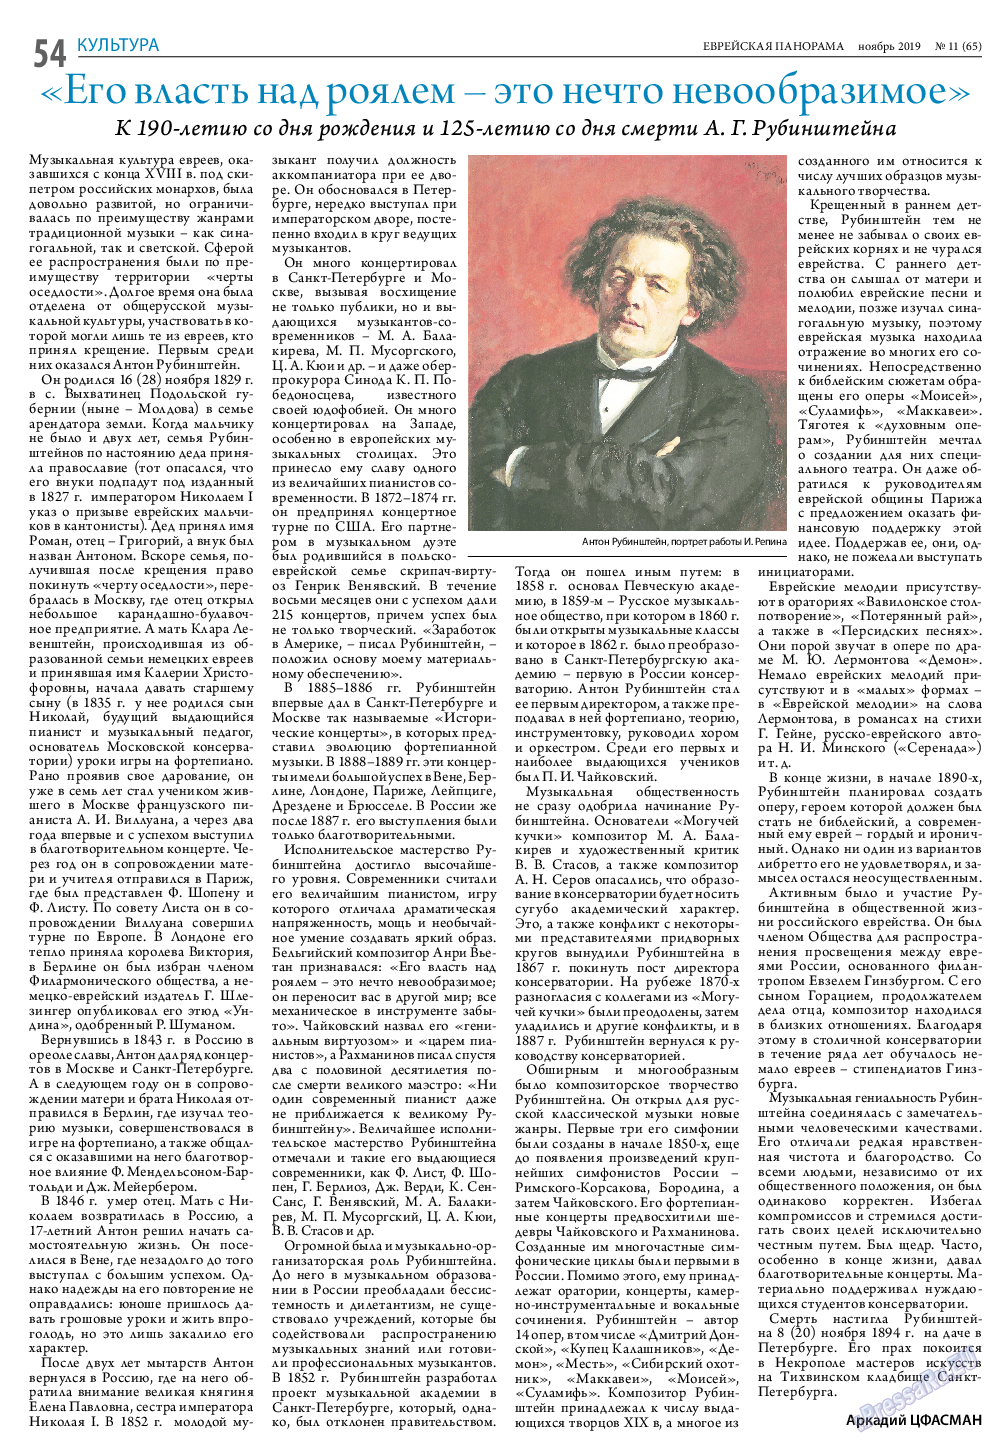 Еврейская панорама, газета. 2019 №11 стр.54